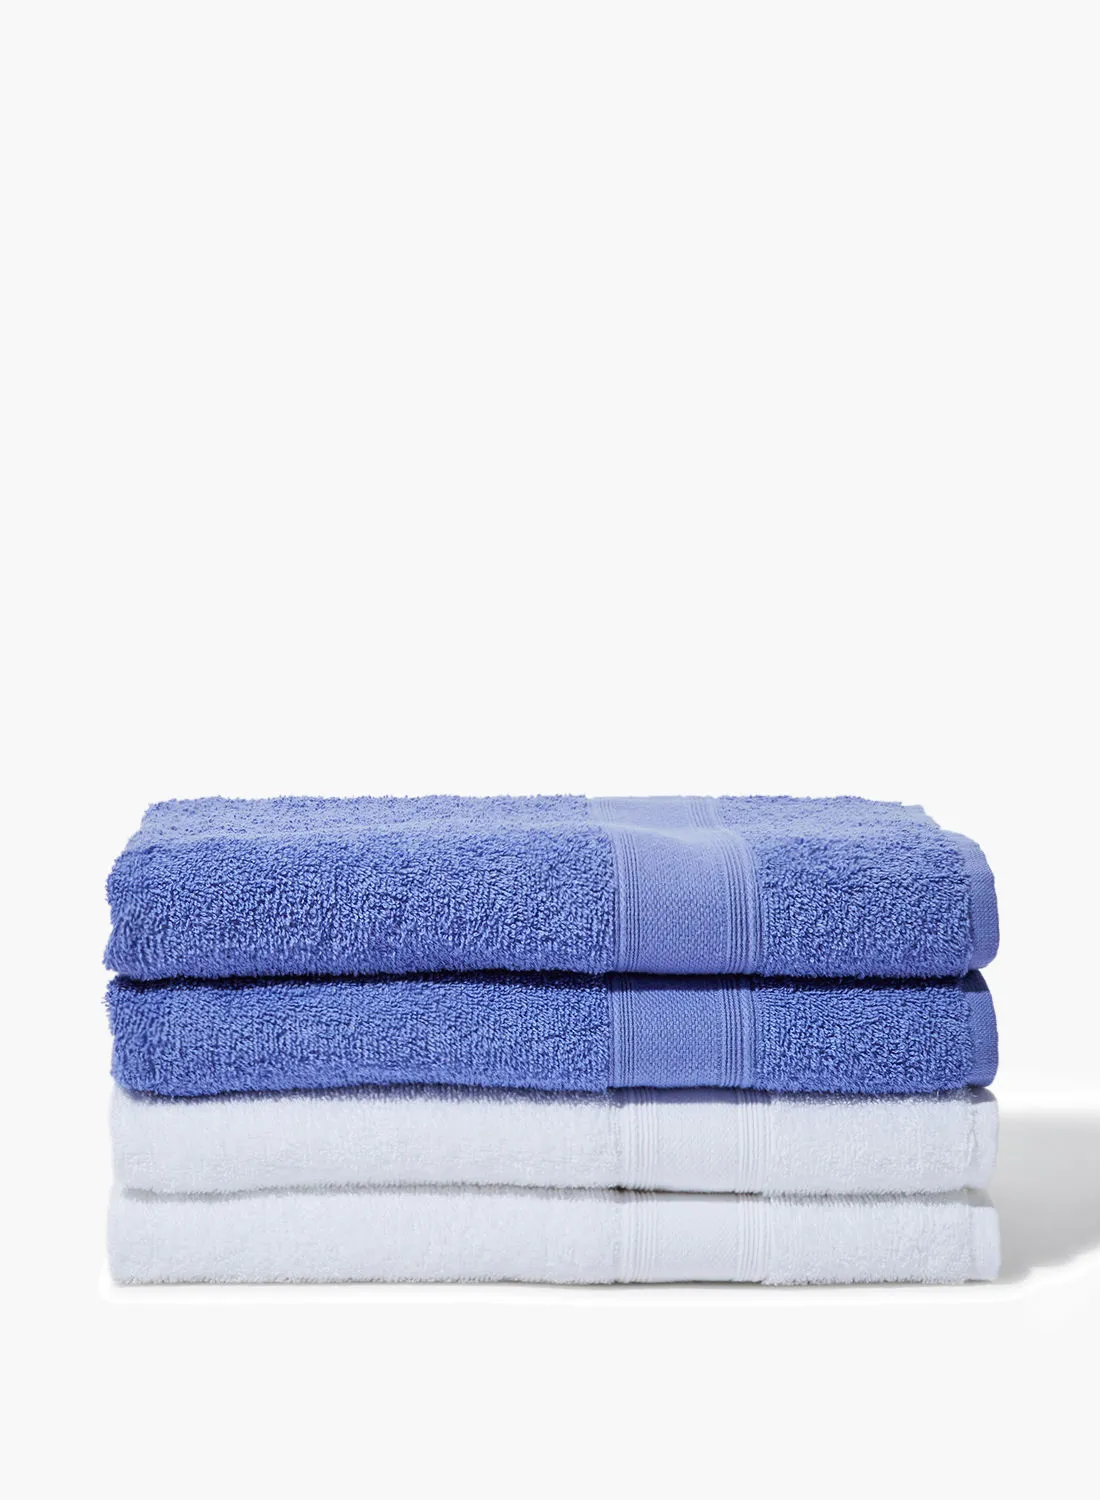 Amal 4 Piece Bathroom Towel Set - 400 GSM 100% Cotton Terry - 4 Bath Towel - Multicolor White/Periwinkle Color -Quick Dry - Super Absorbent